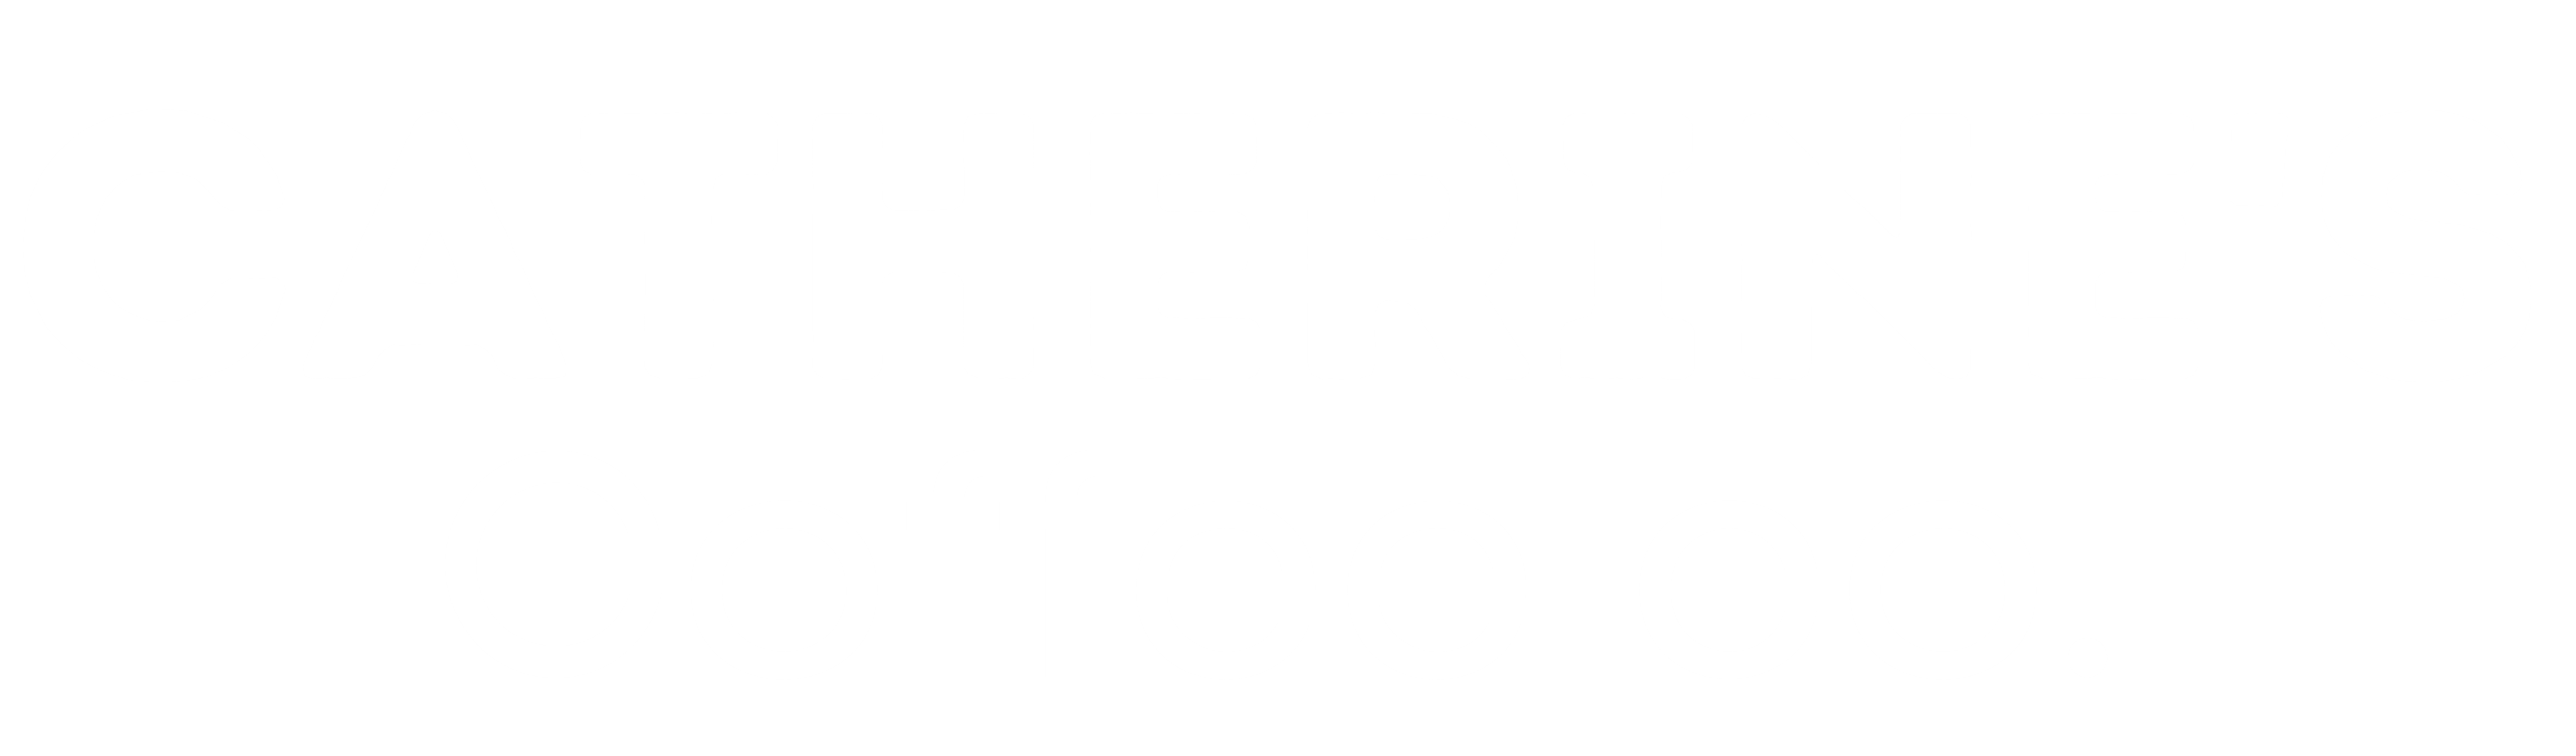 catherinescoffee